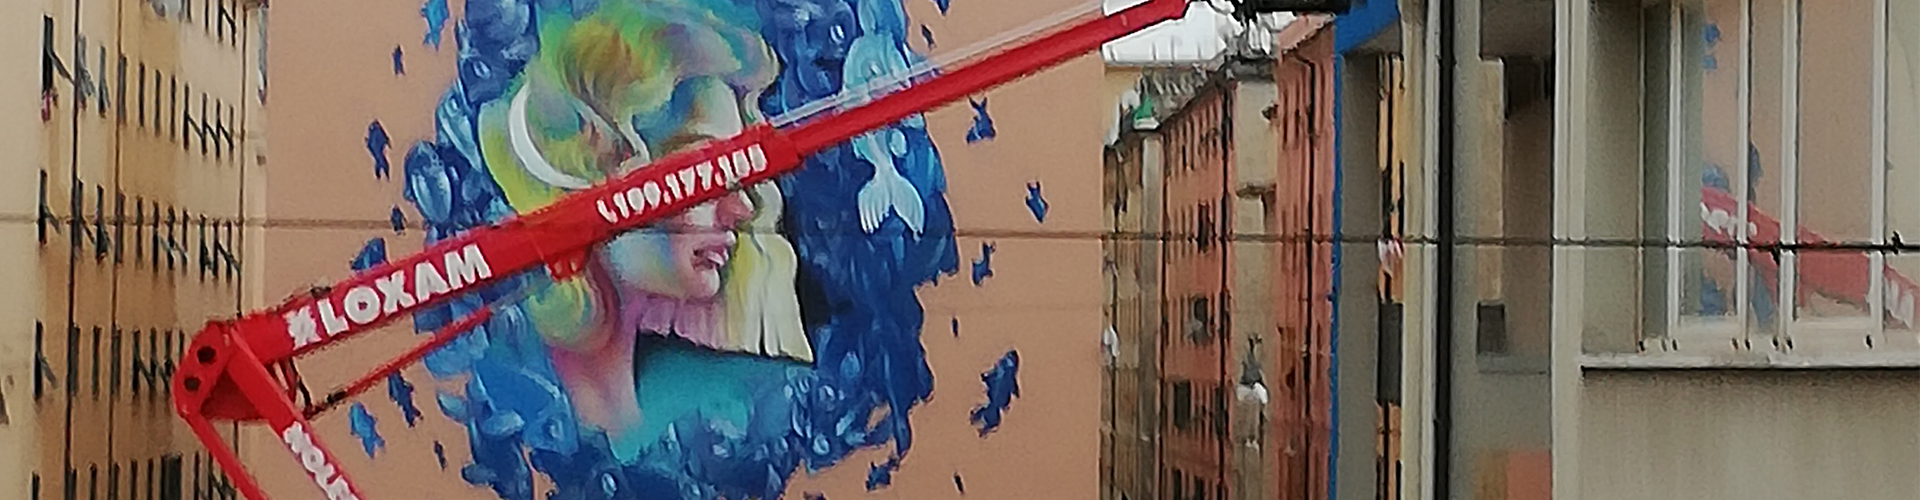 Loxam: il progetto di street art "On the wall" a Genova